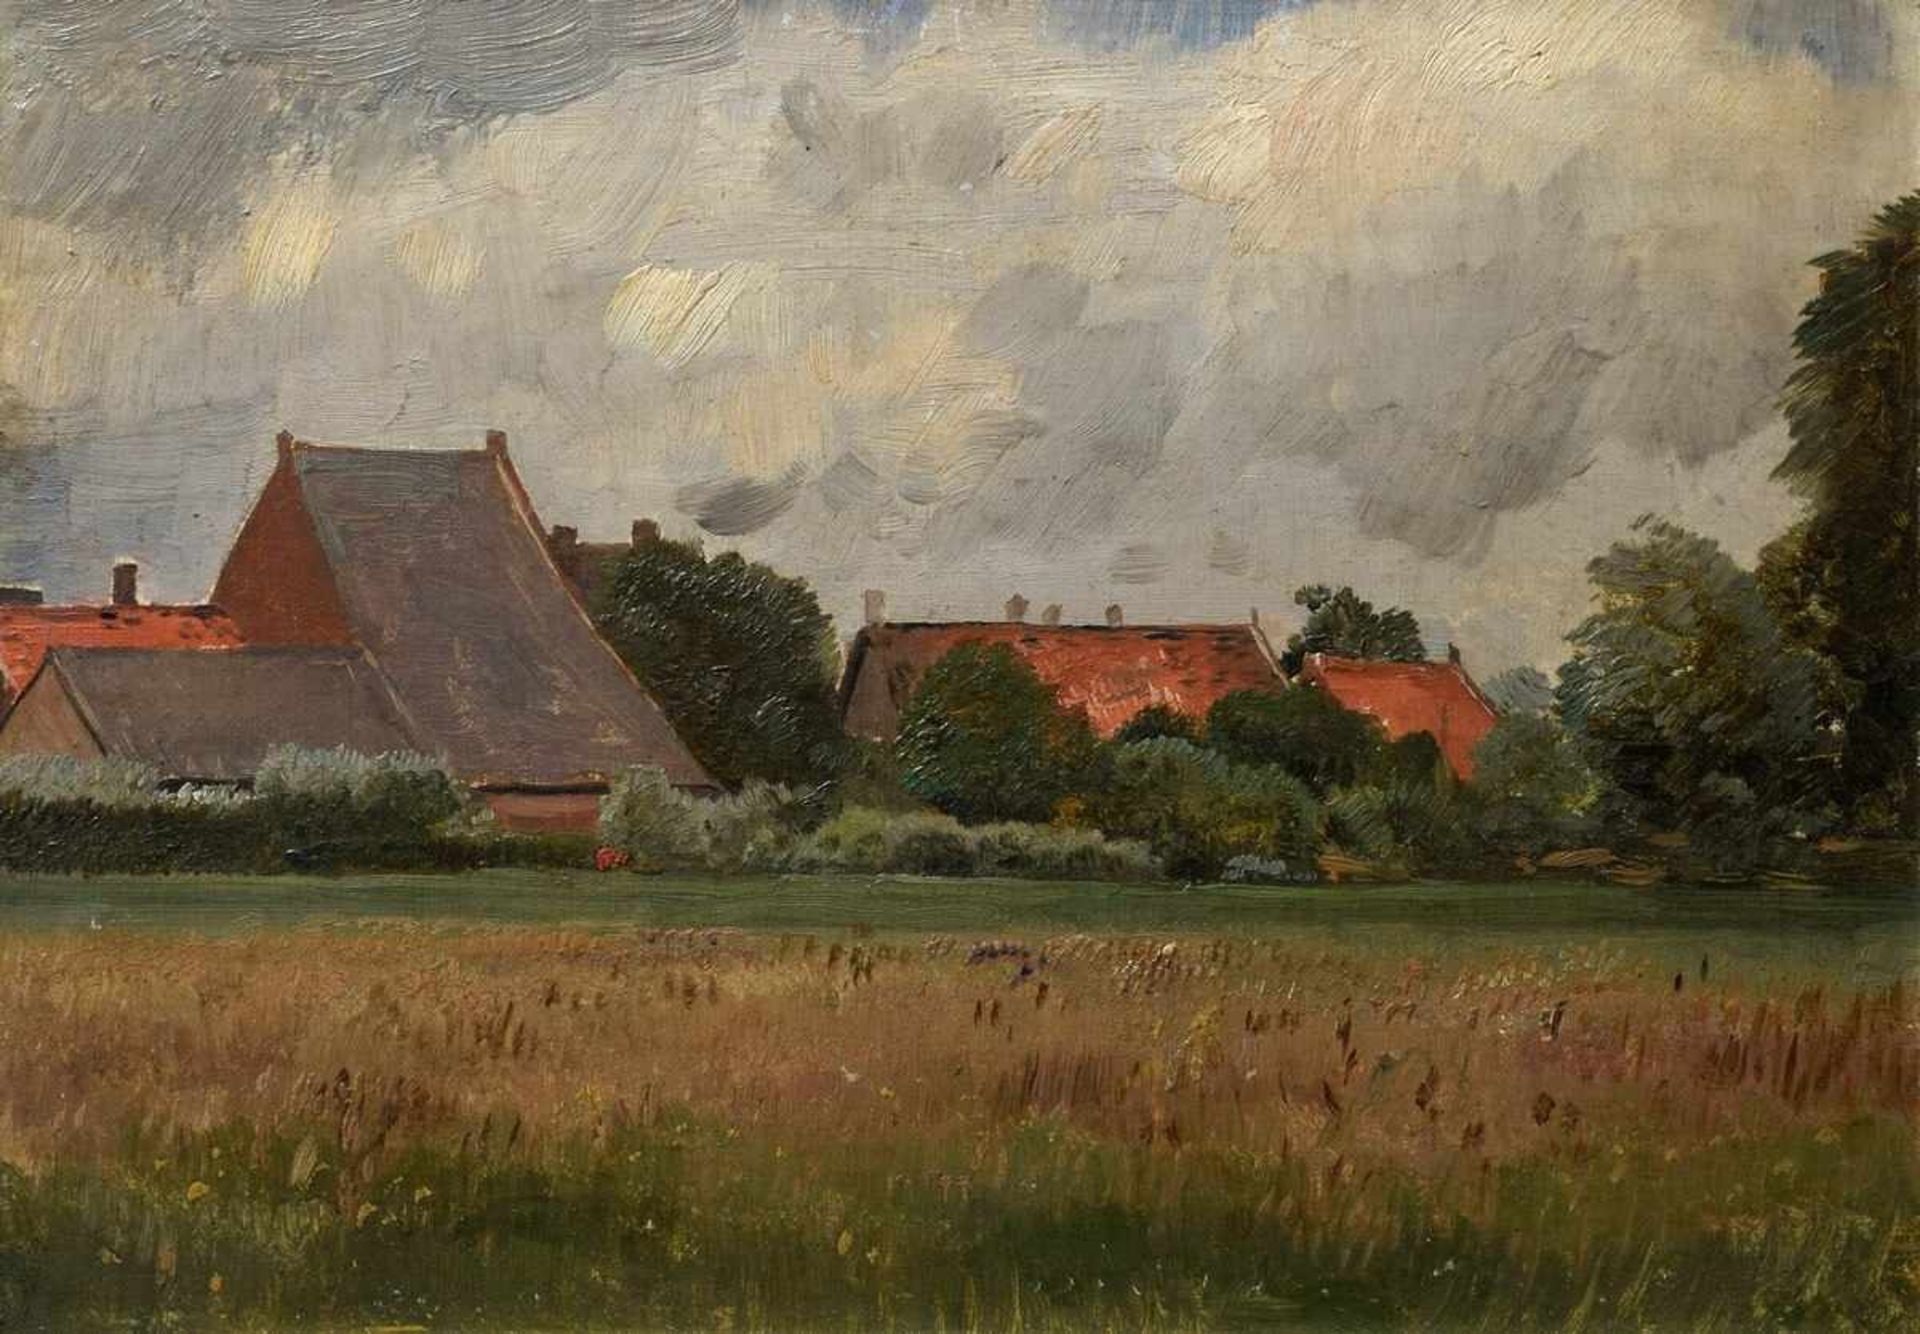 Stadtler, Anton von (1850-1917) "Village view", oil/canvas over cardboard, at the back side old